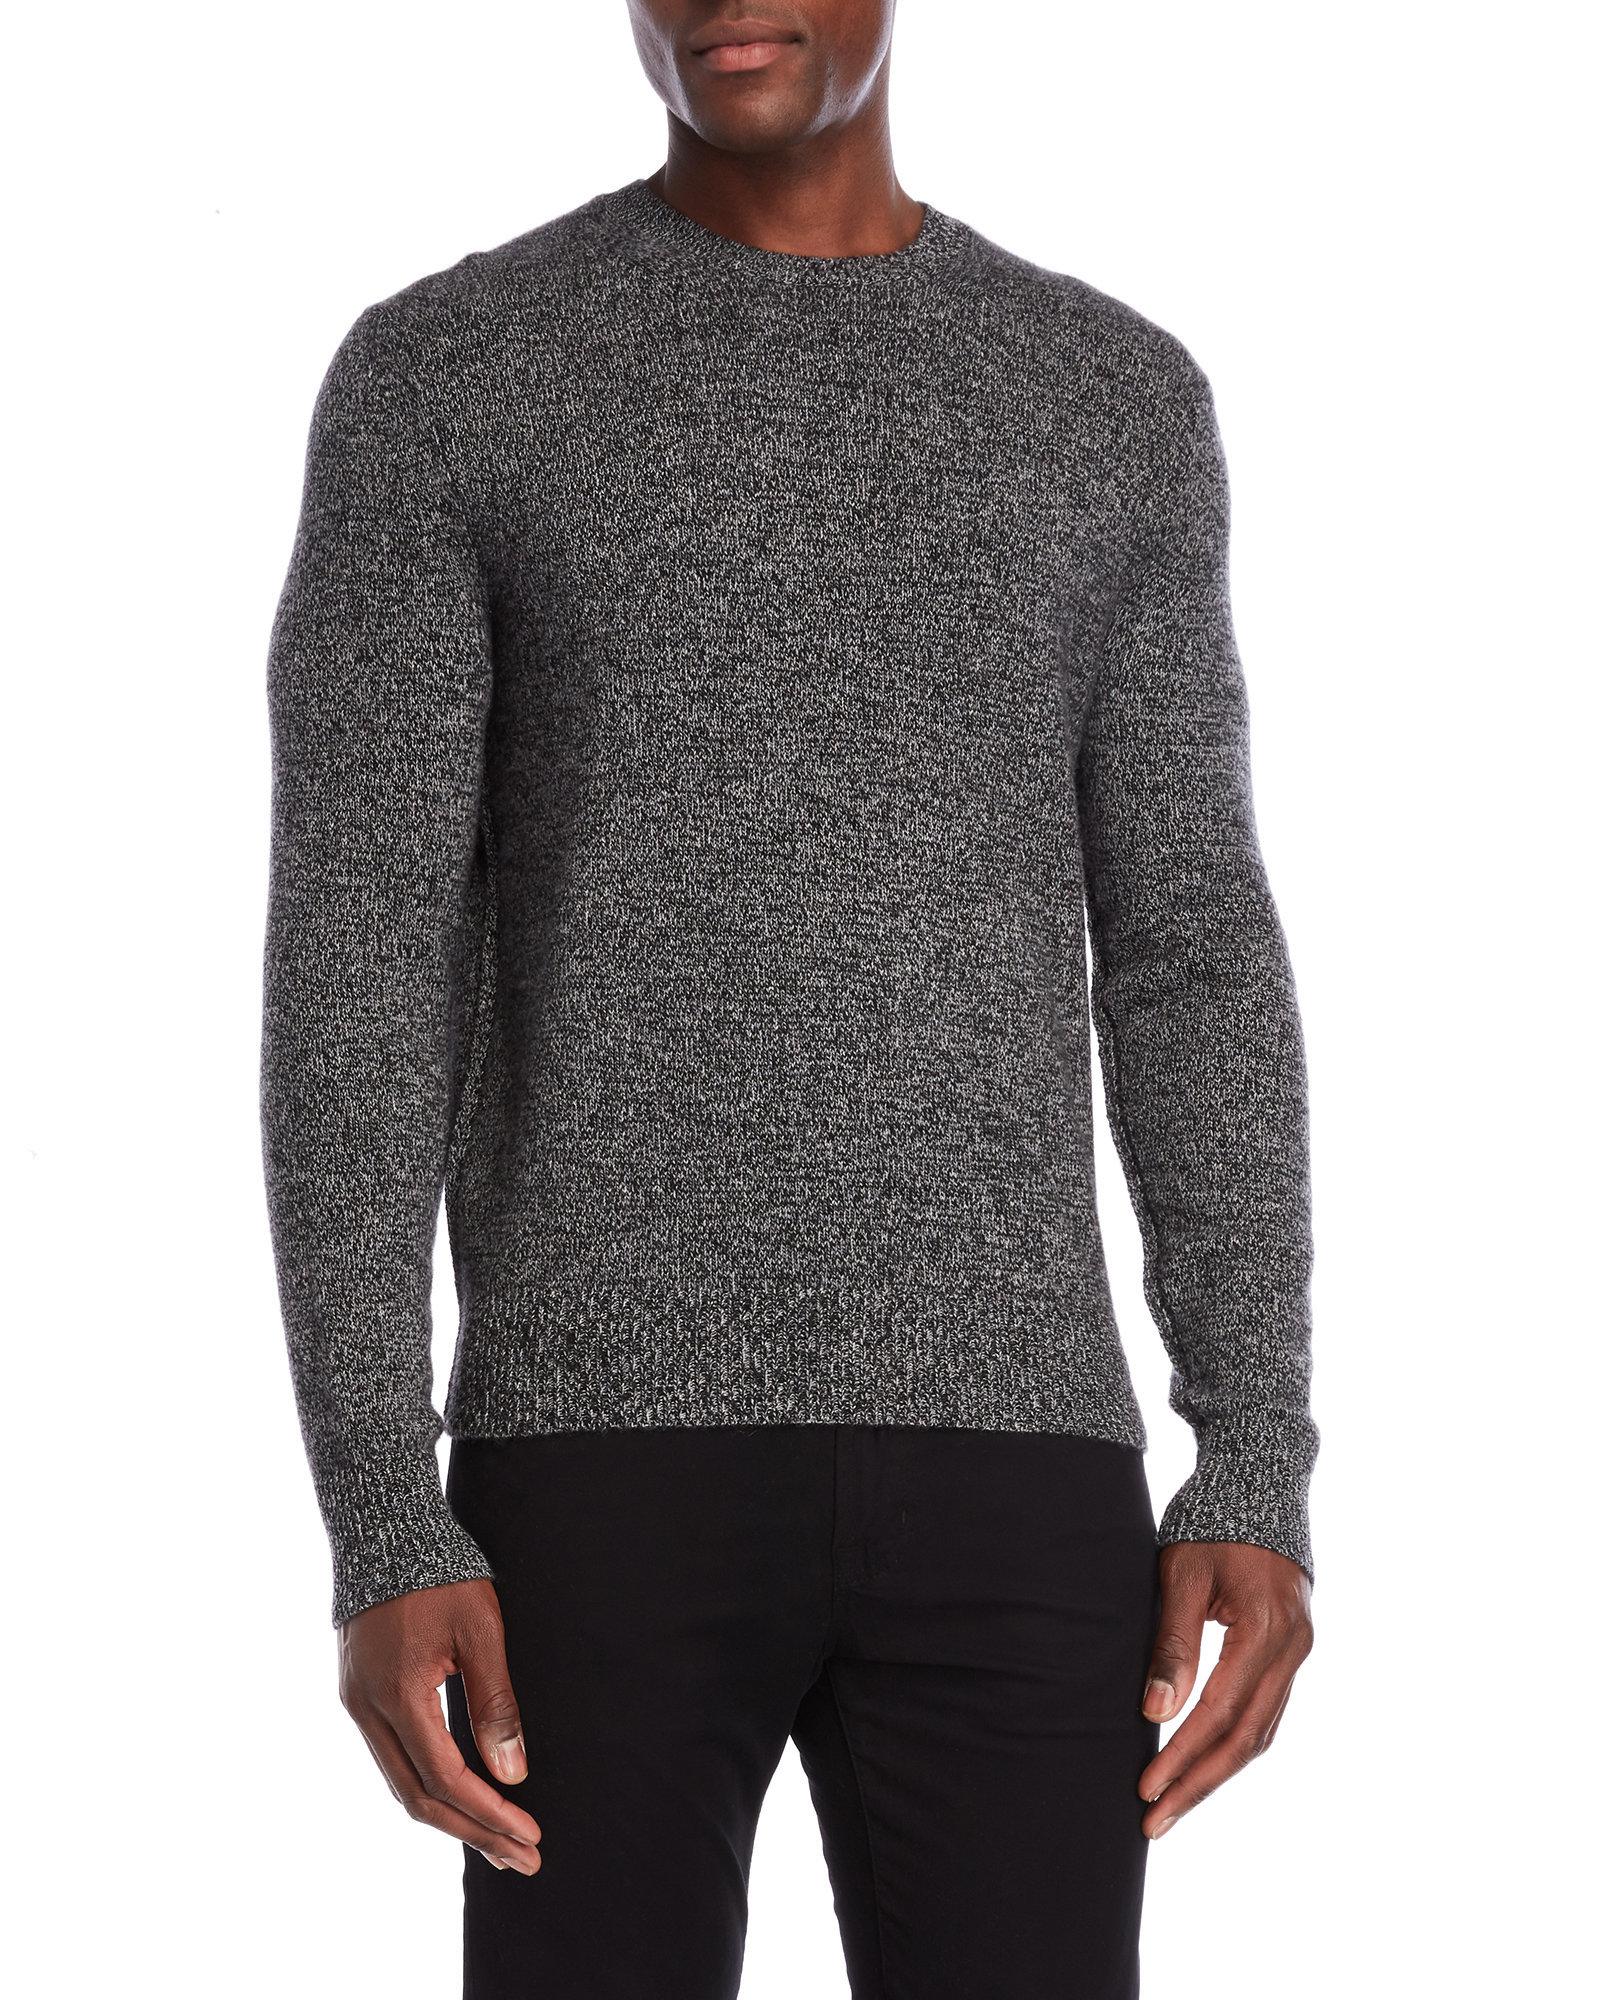 Lyst - Rag & Bone Cashmere Crewneck Long Sleeve Sweater in Black for Men